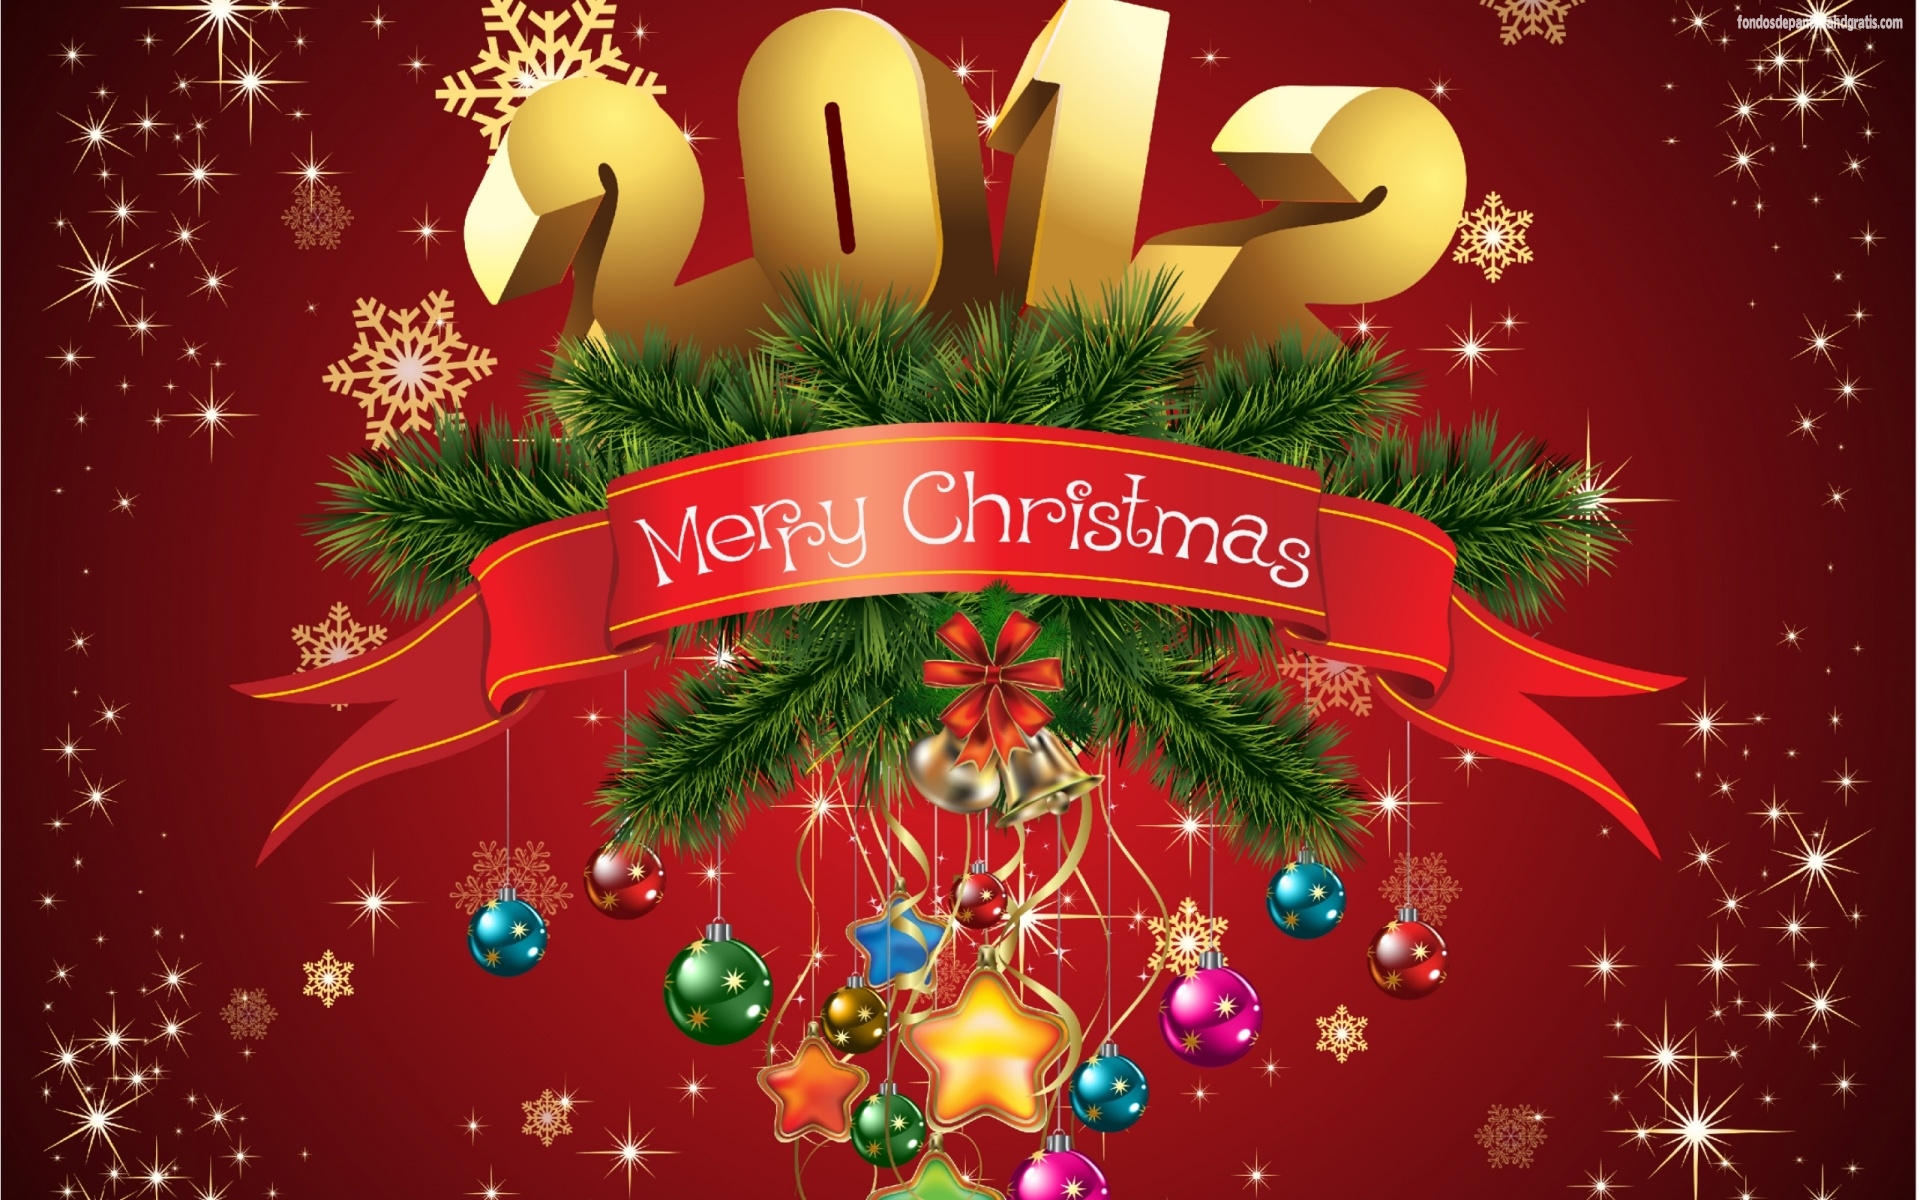 Descargar imagen merry christmas 2012 wallpapers 31824 1920x1200 hd